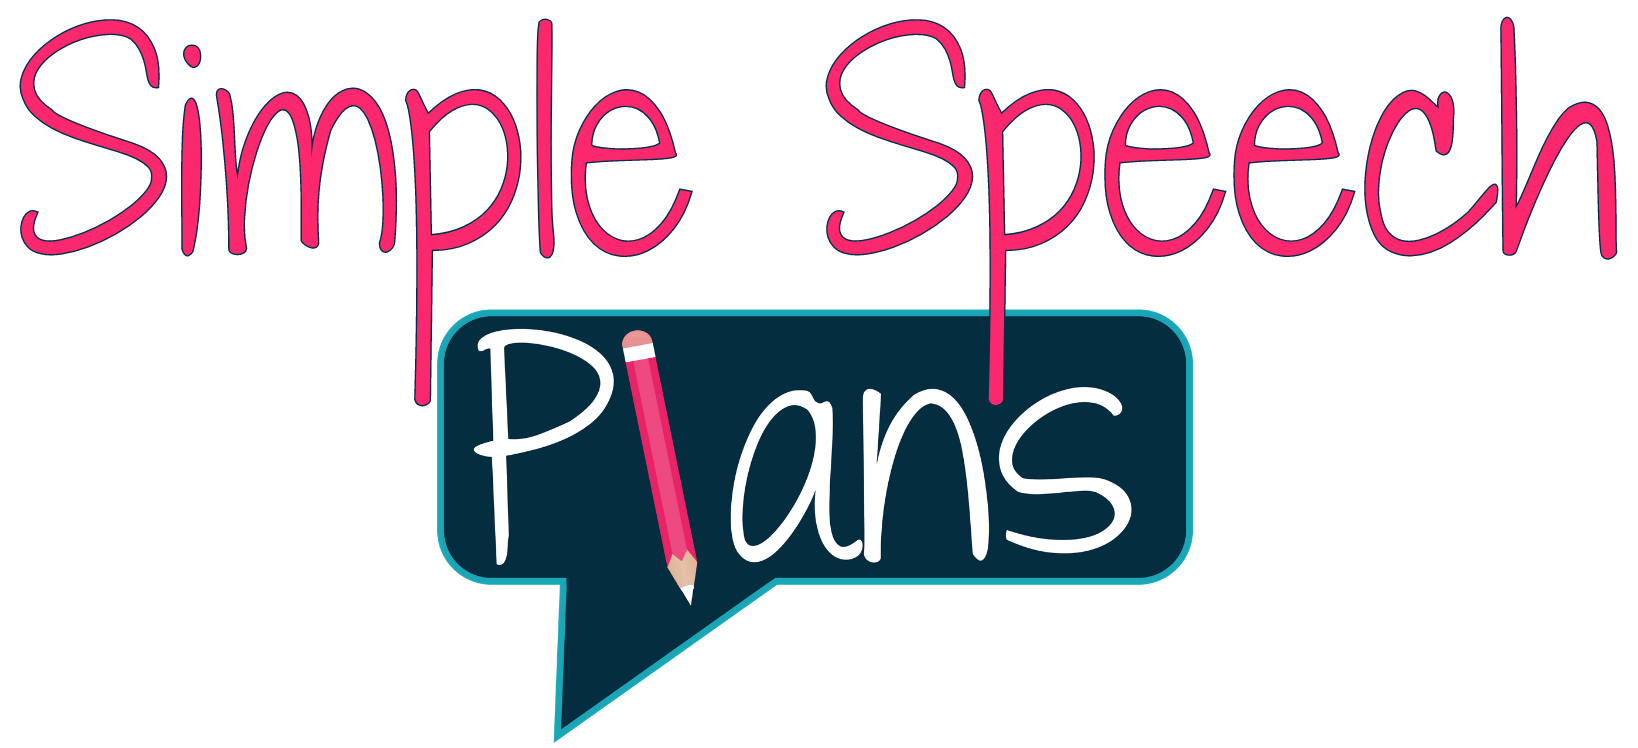 Simple Speech Plans